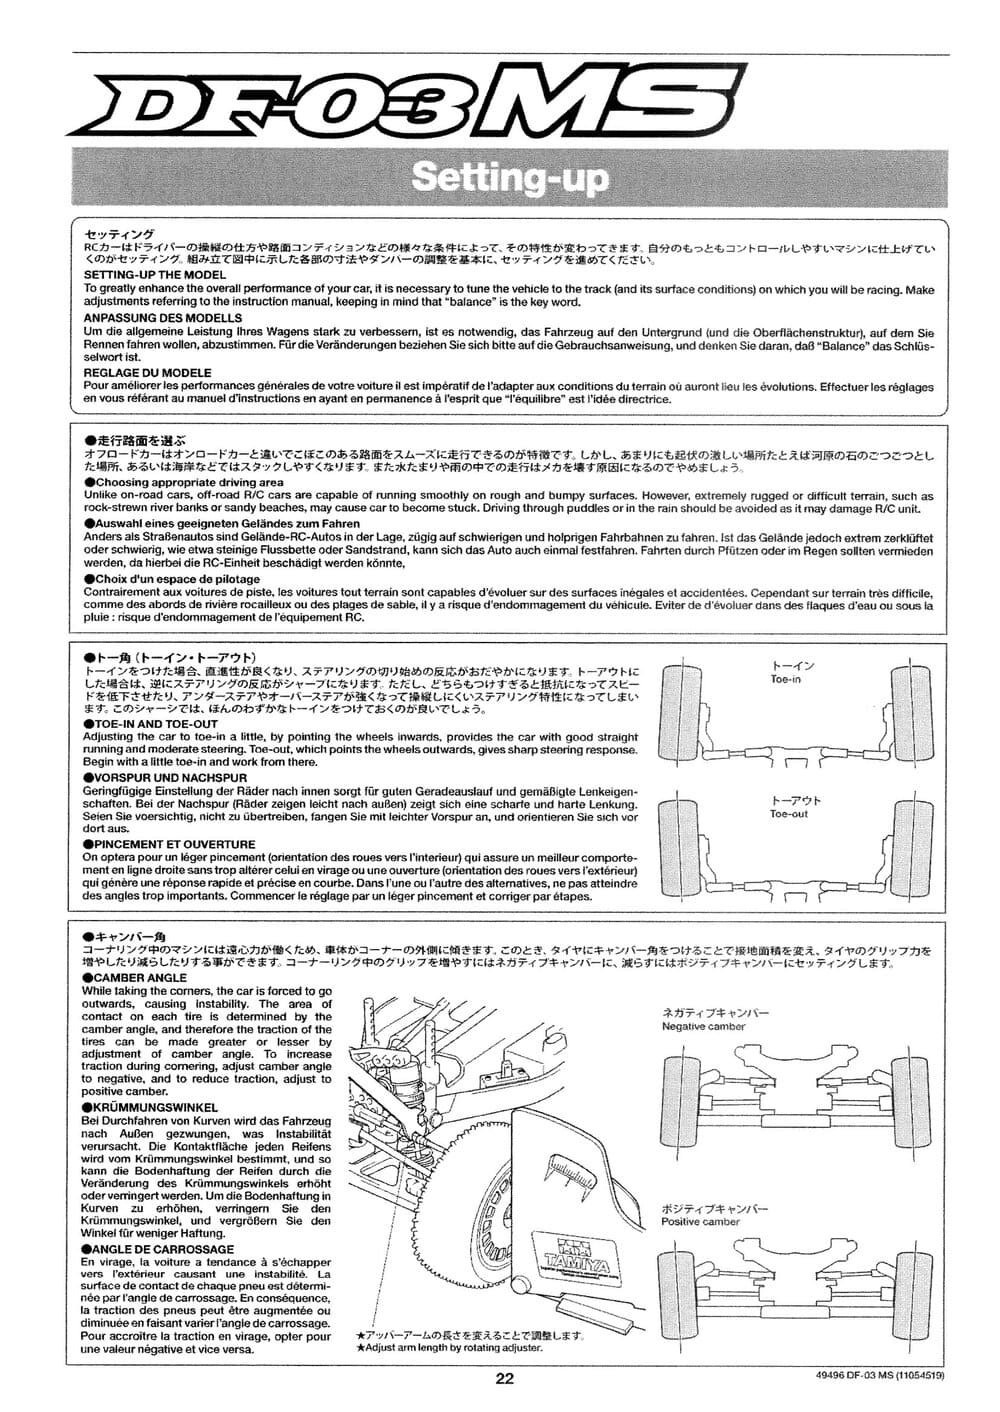 Tamiya - DF-03 MS Chassis Chassis - Manual - Page 22